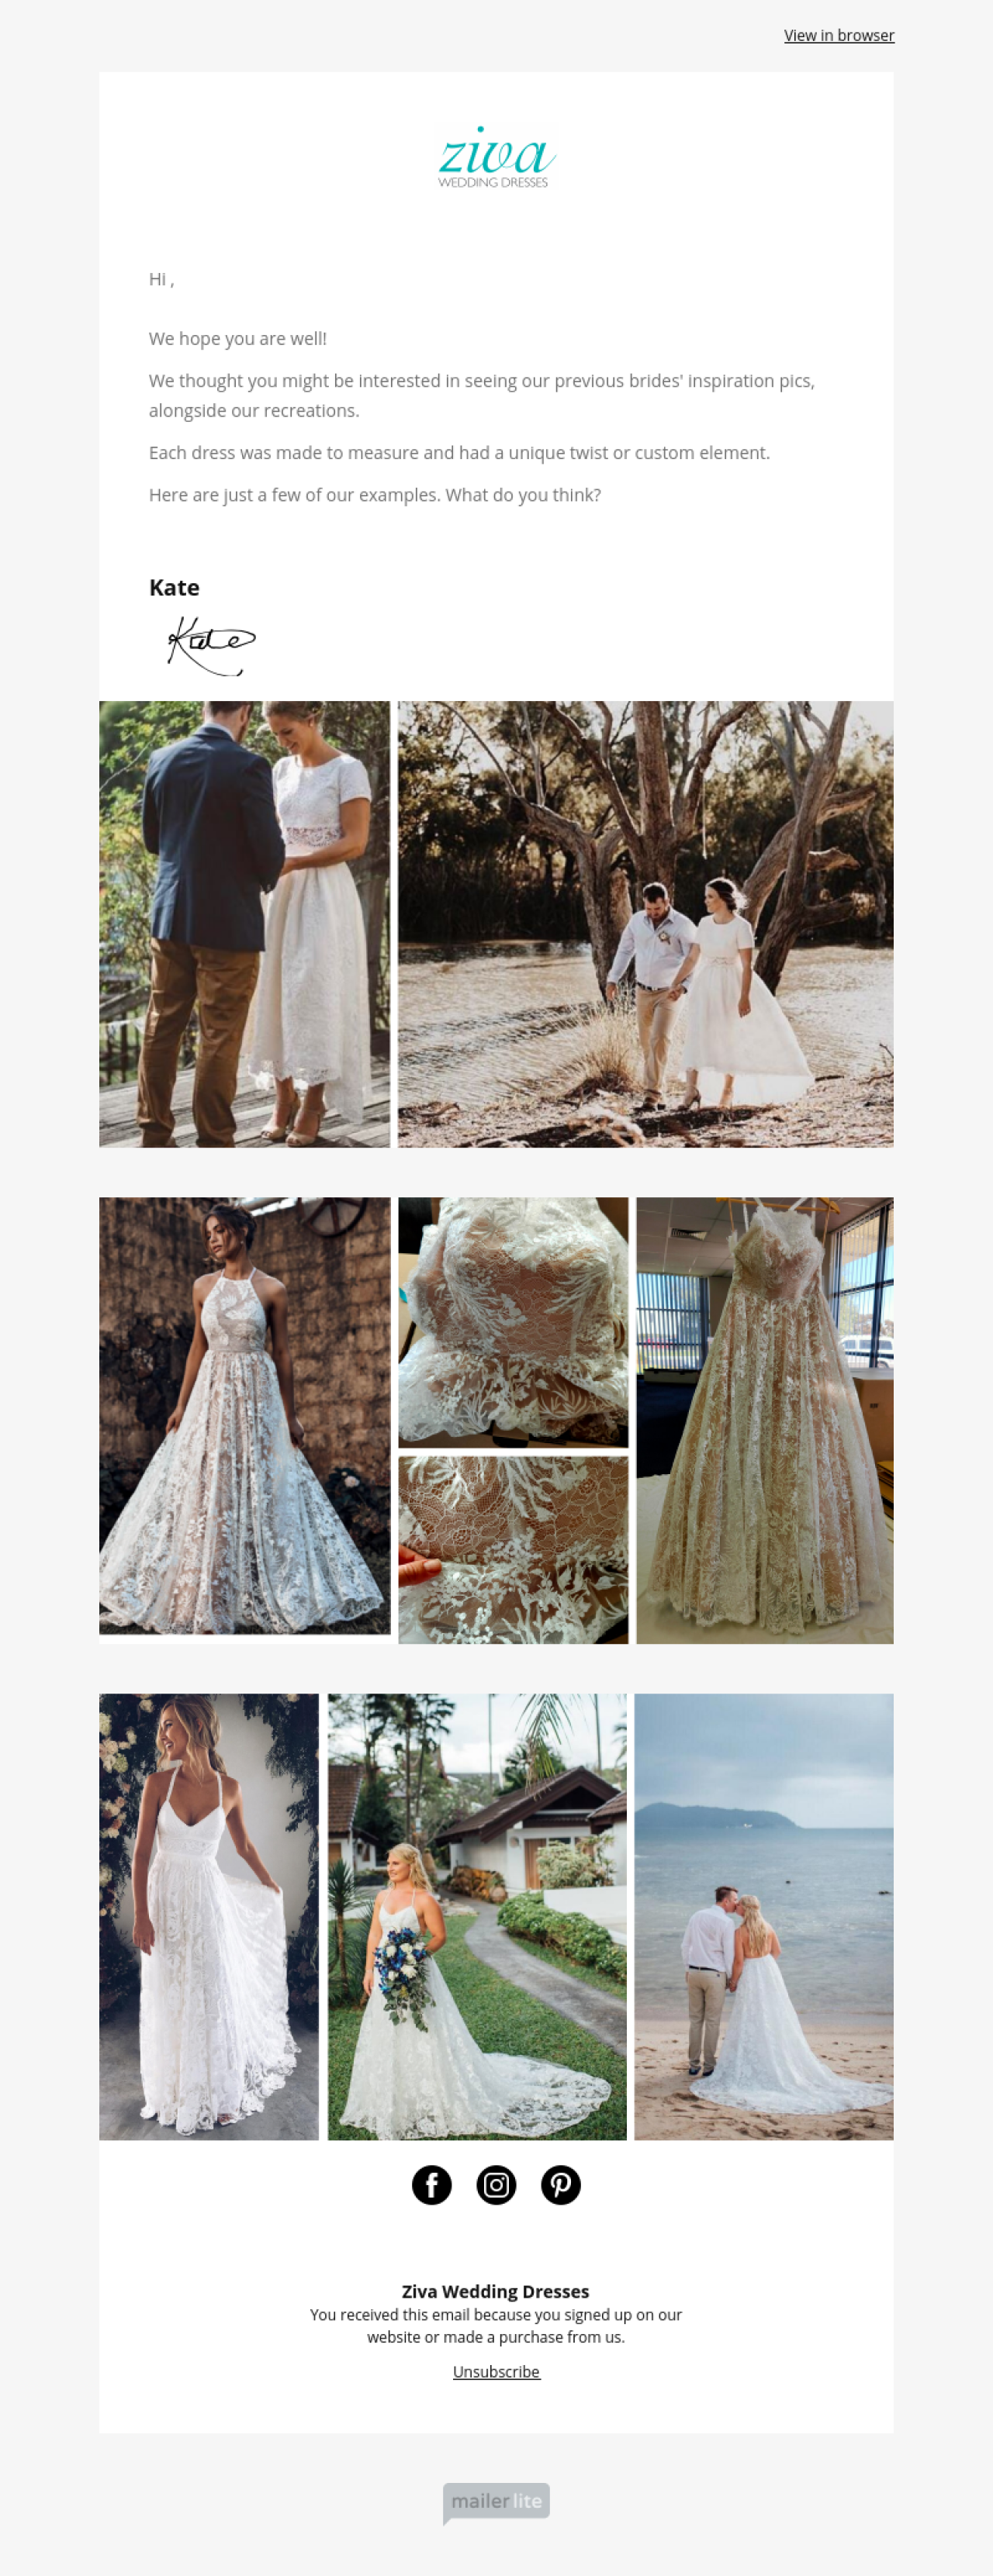 Ziva Wedding Dresses example - Made with MailerLite